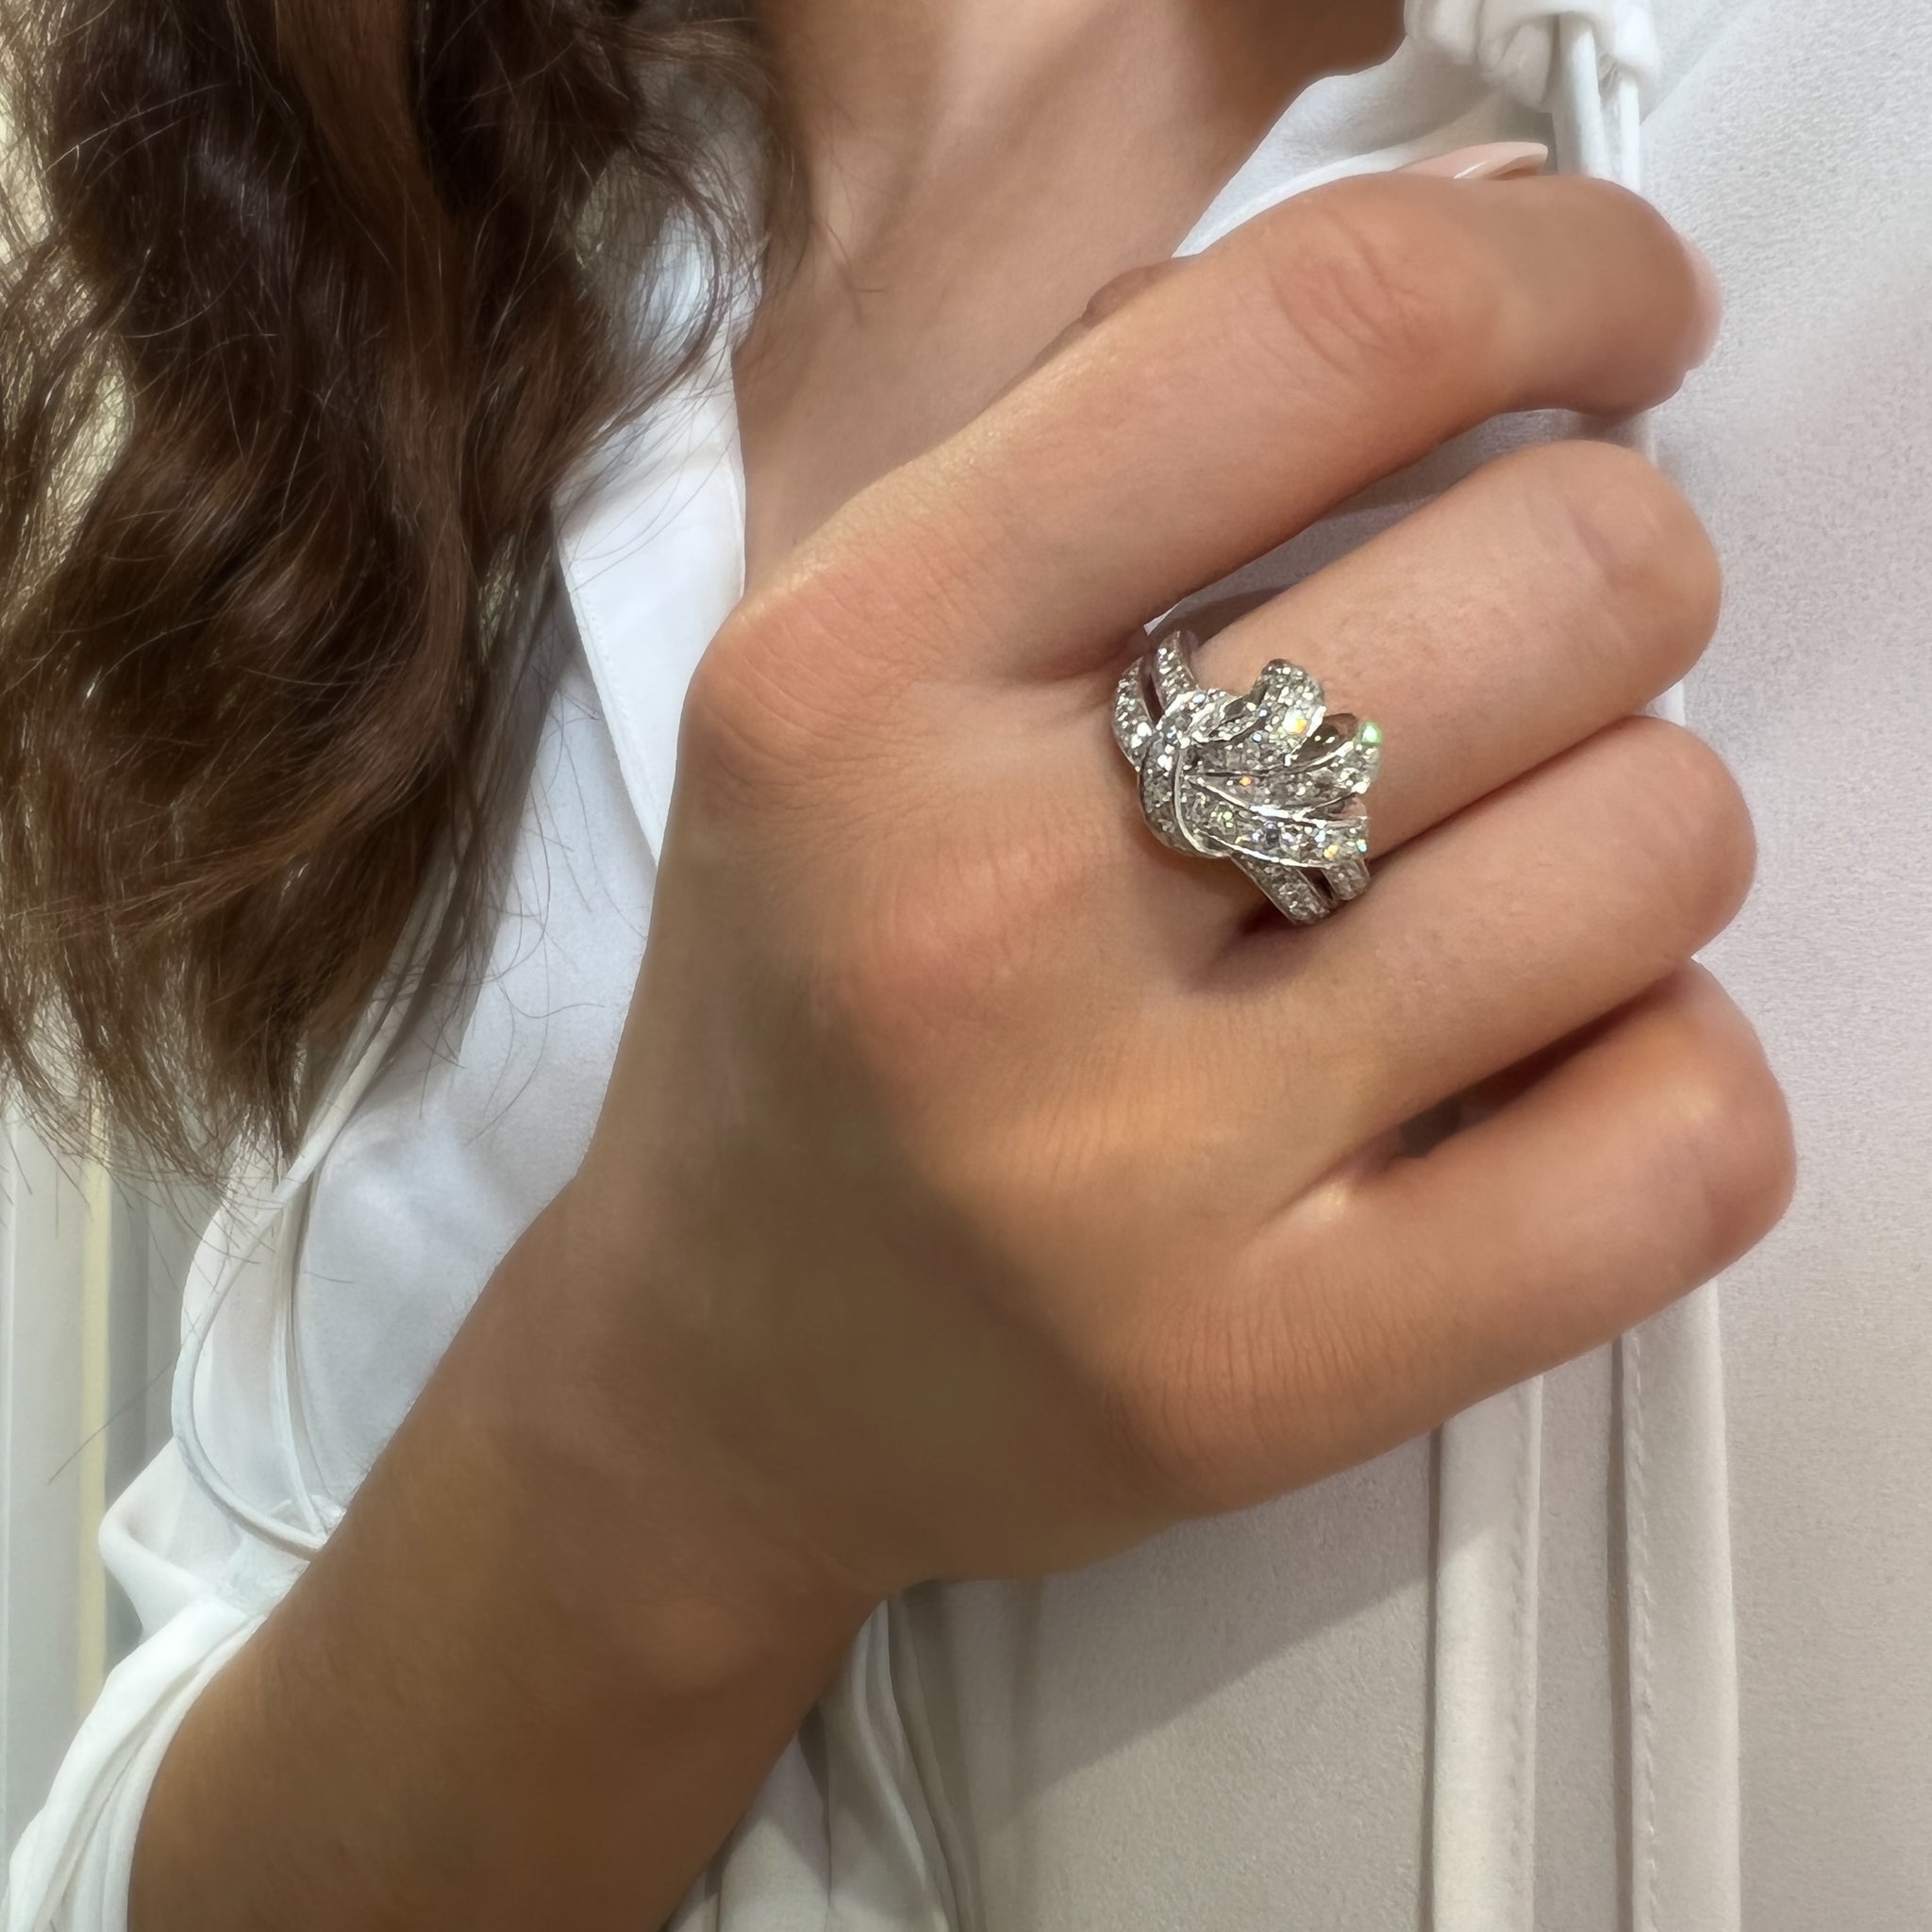 Platinum 1.32ct Pavé Set Diamond Knot Dress Ring